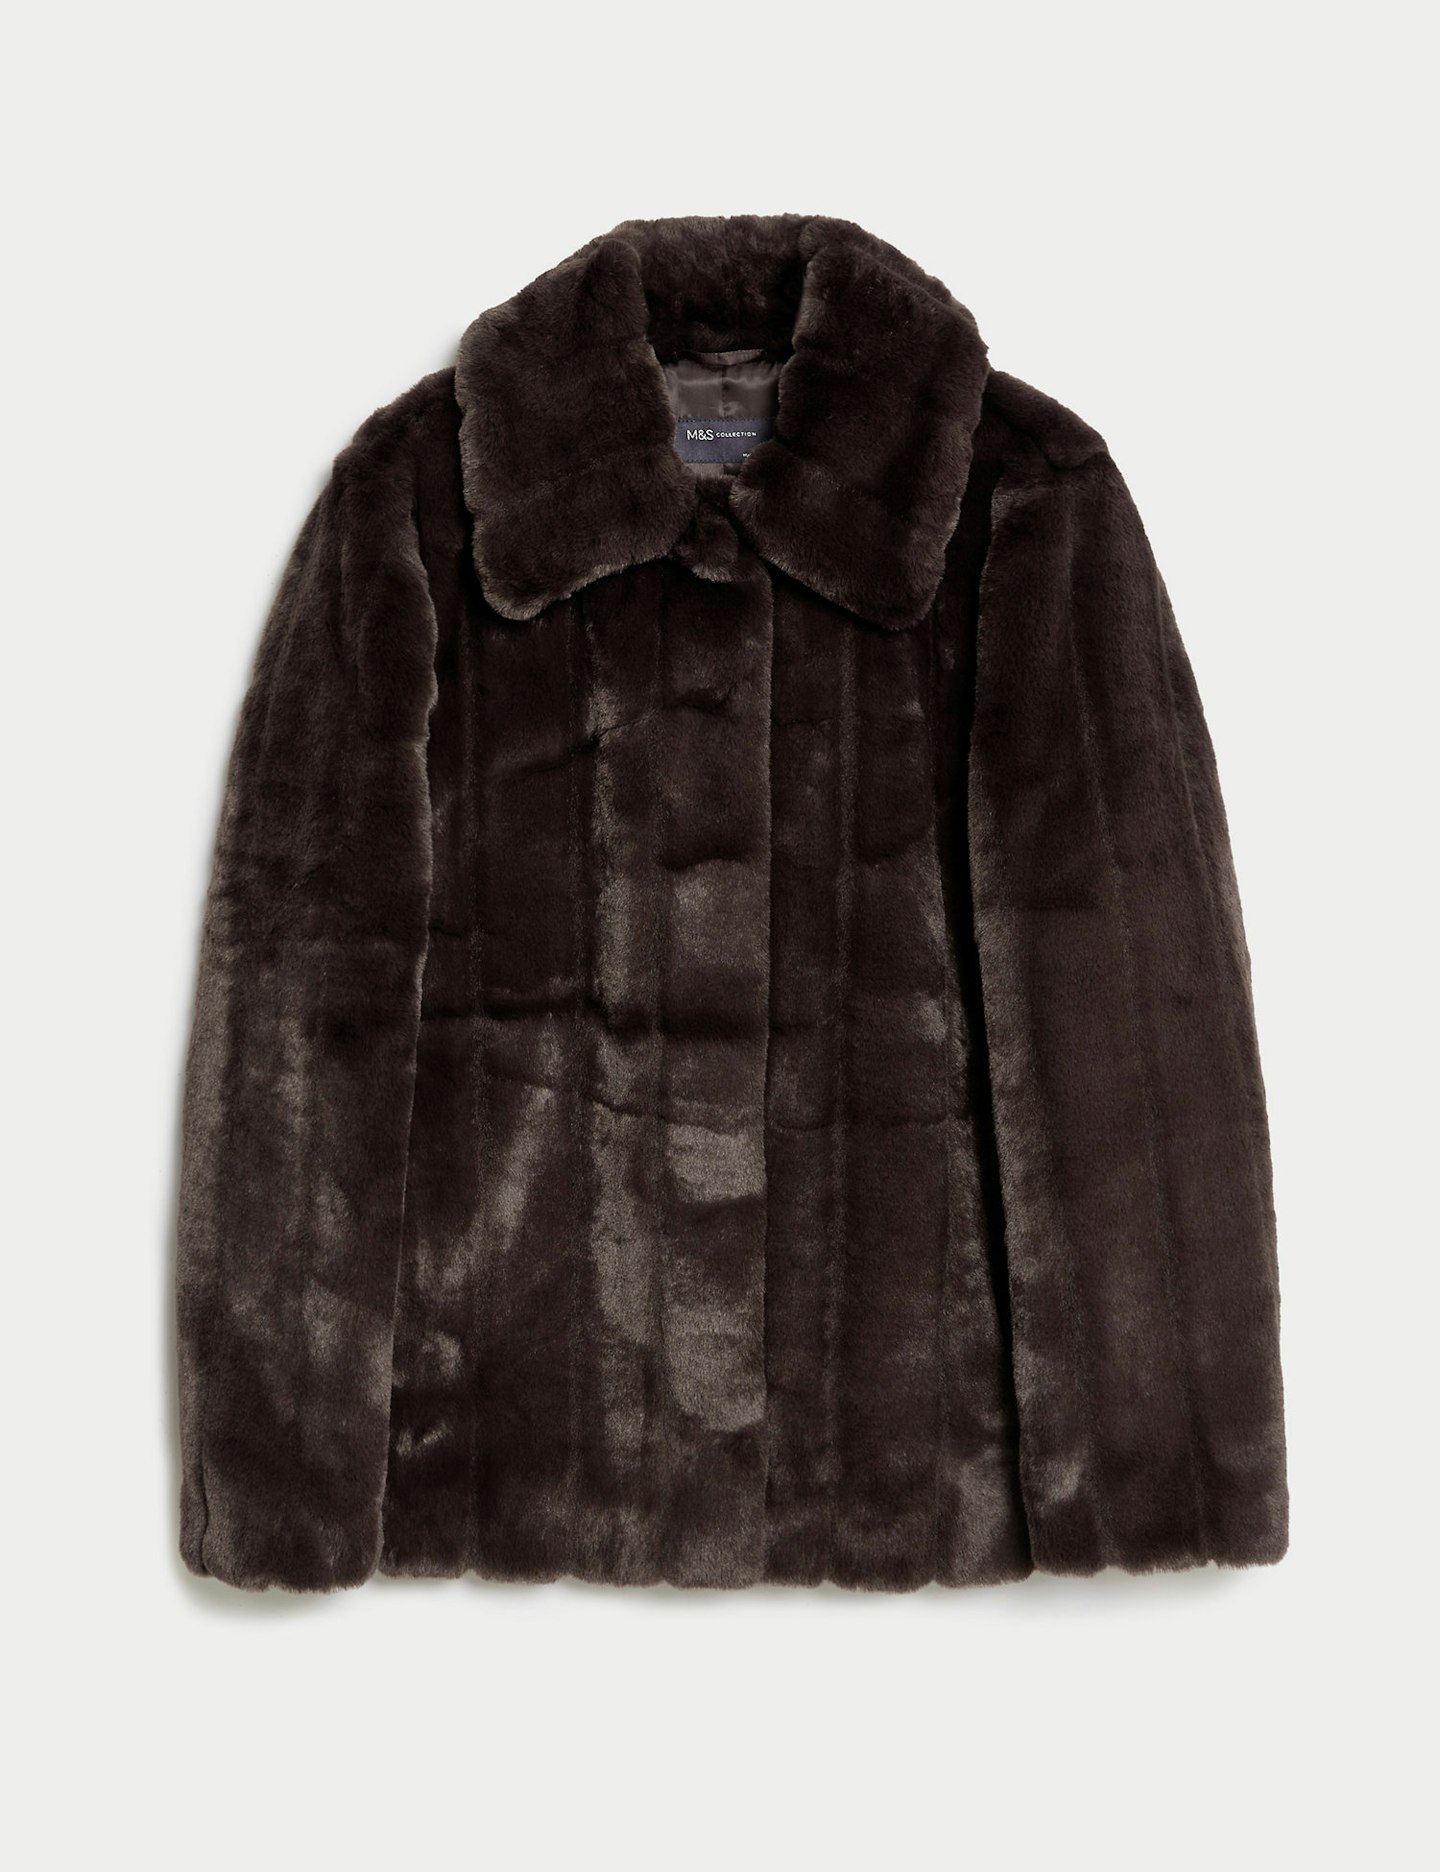 M&S faux fur jacket selena gomez